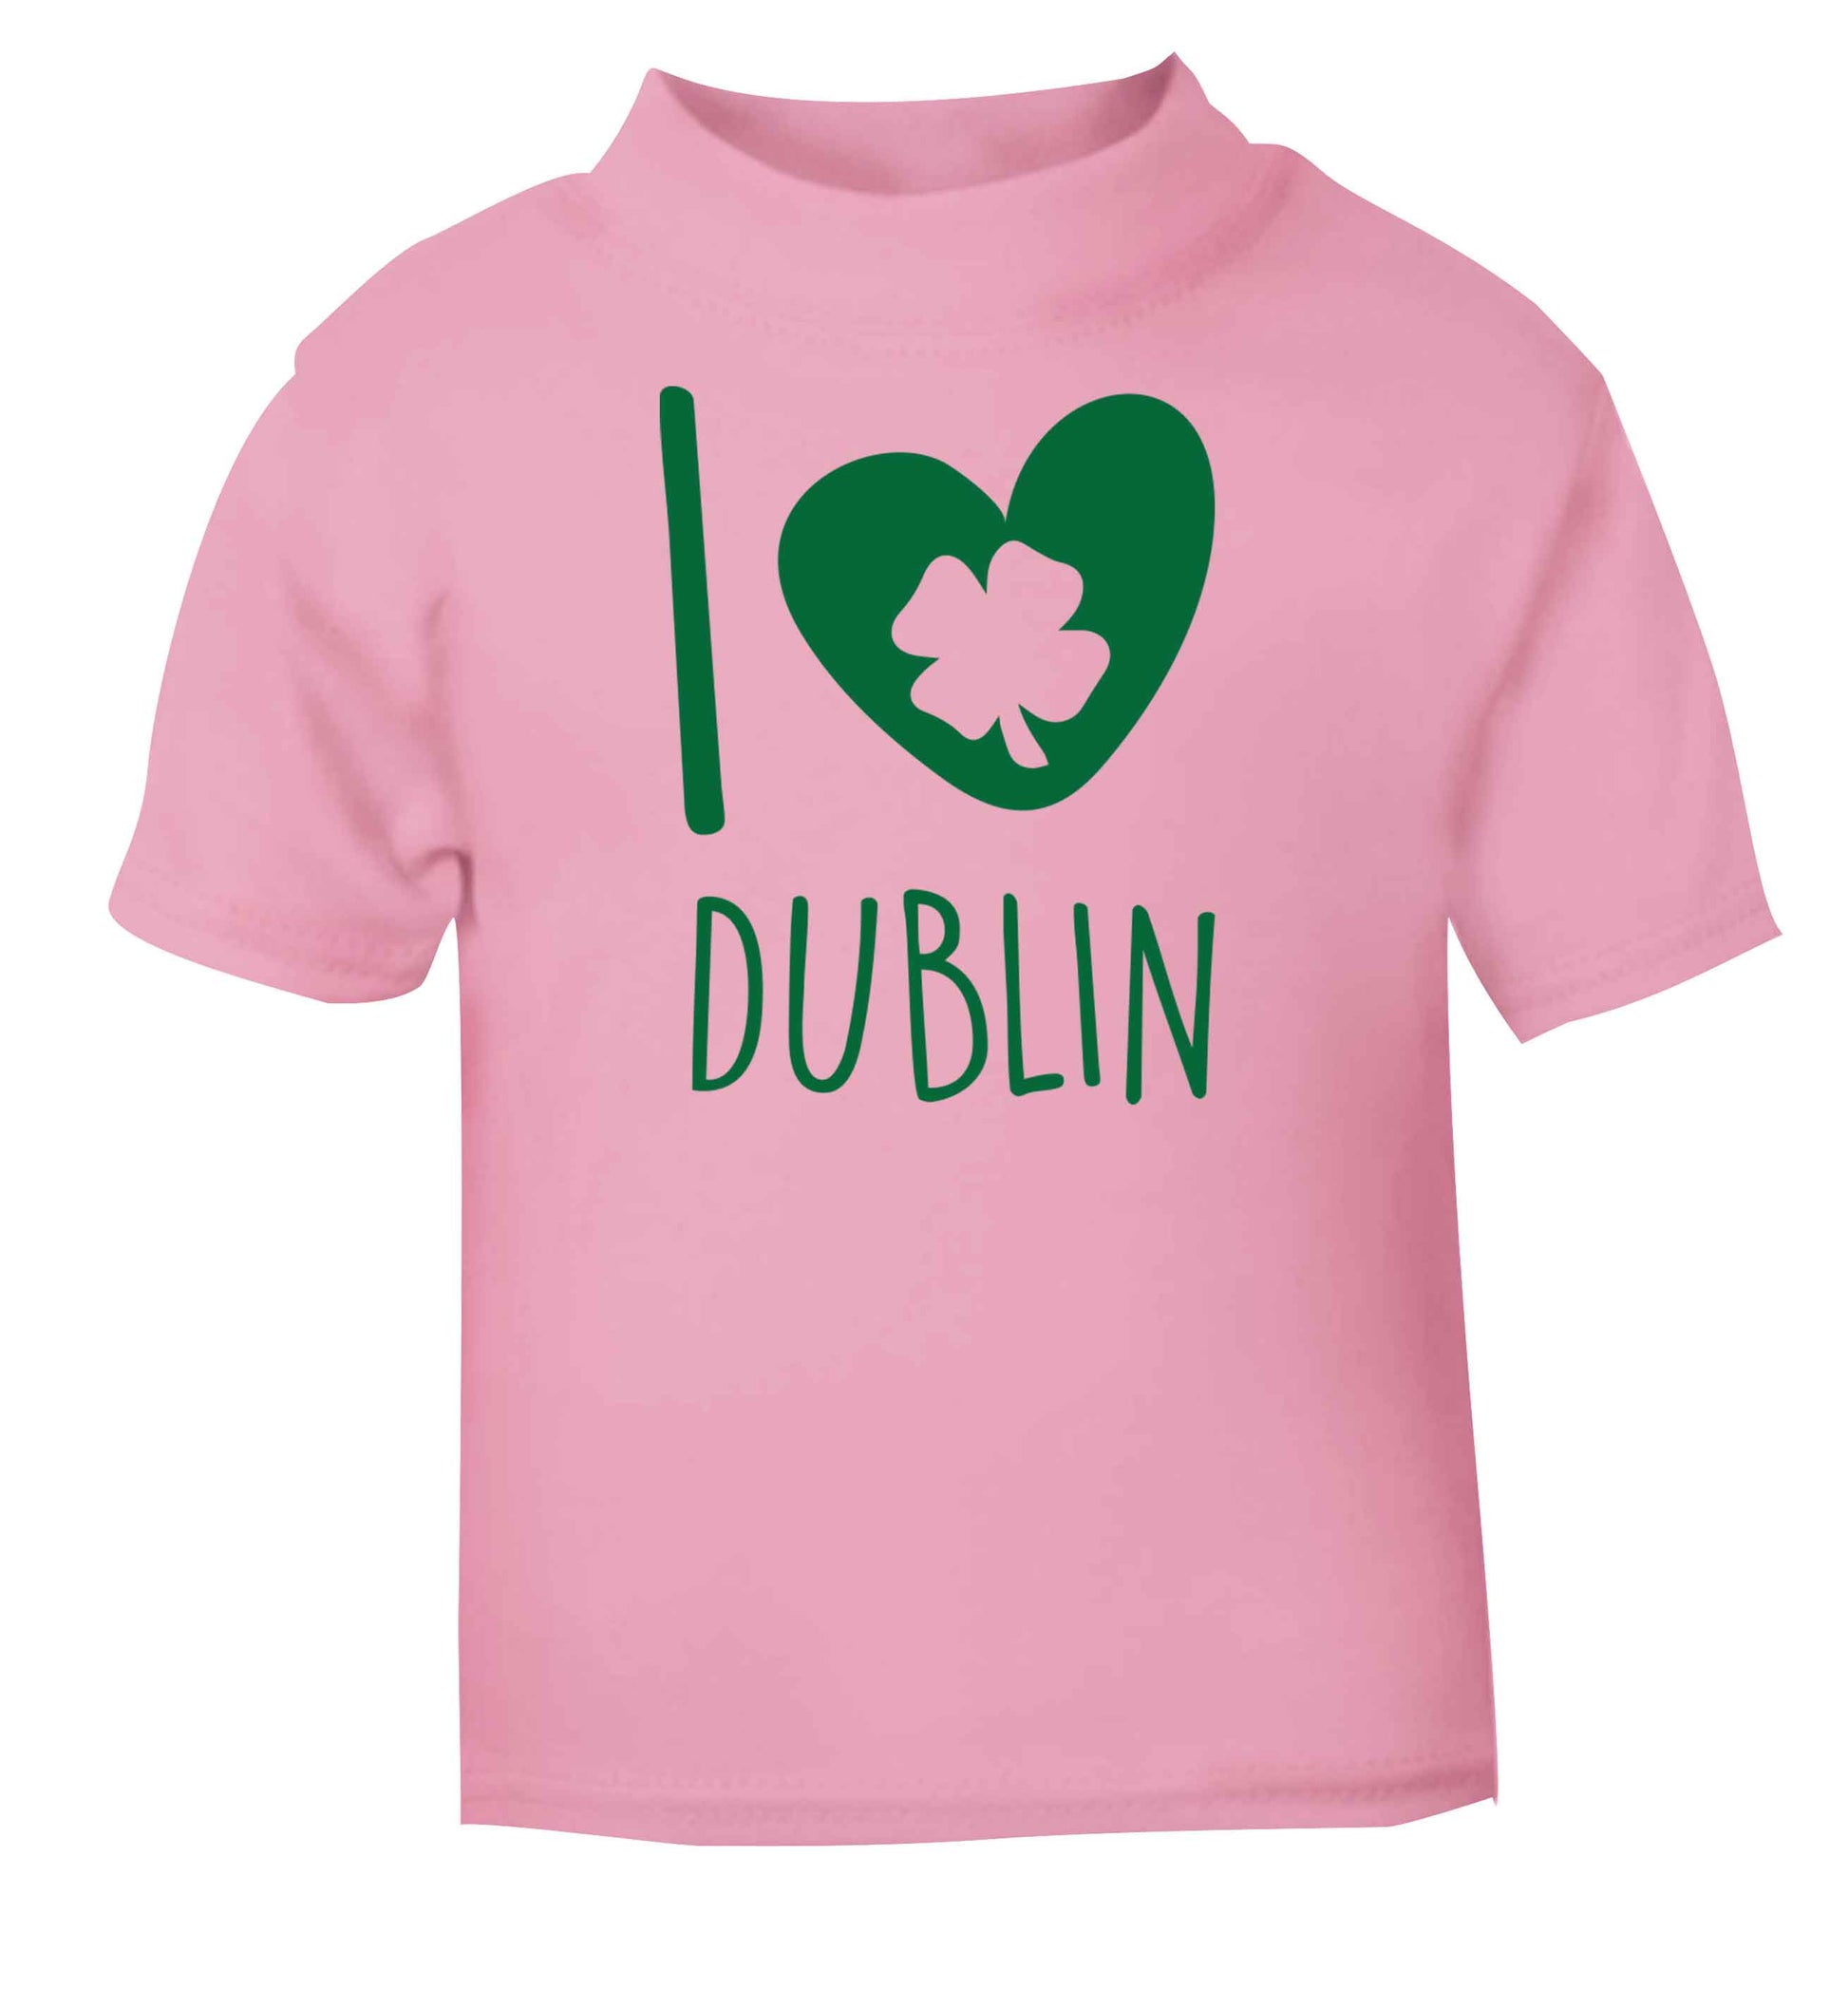 I love Dublin light pink baby toddler Tshirt 2 Years